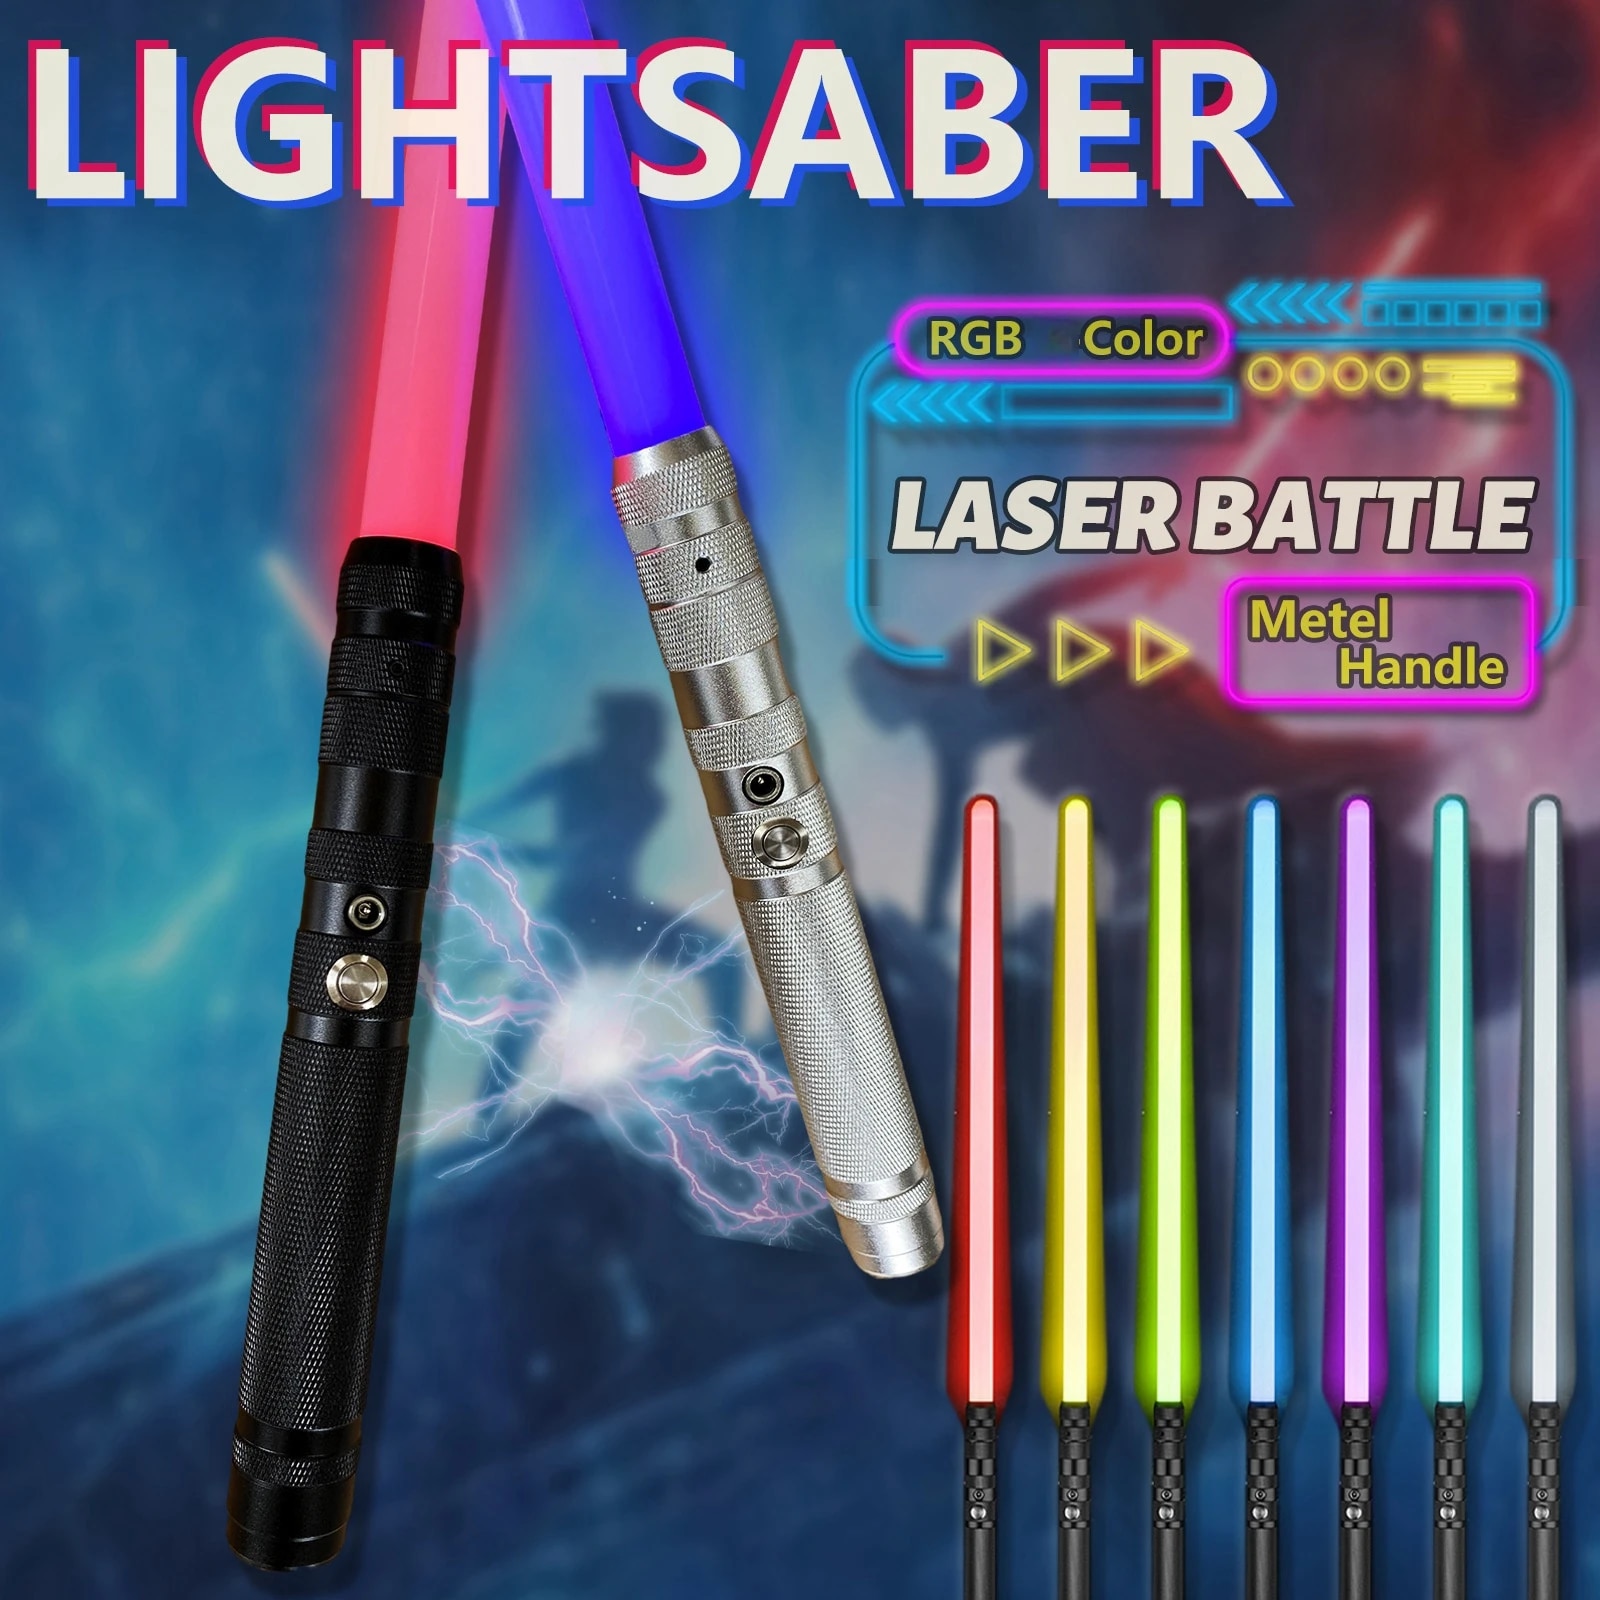 2 In 1 Retractable Lightsaber Toy 16 Color Laser Sword Colsplay Training Prop RGB Metal Laser Blade Glowing Stage Prop